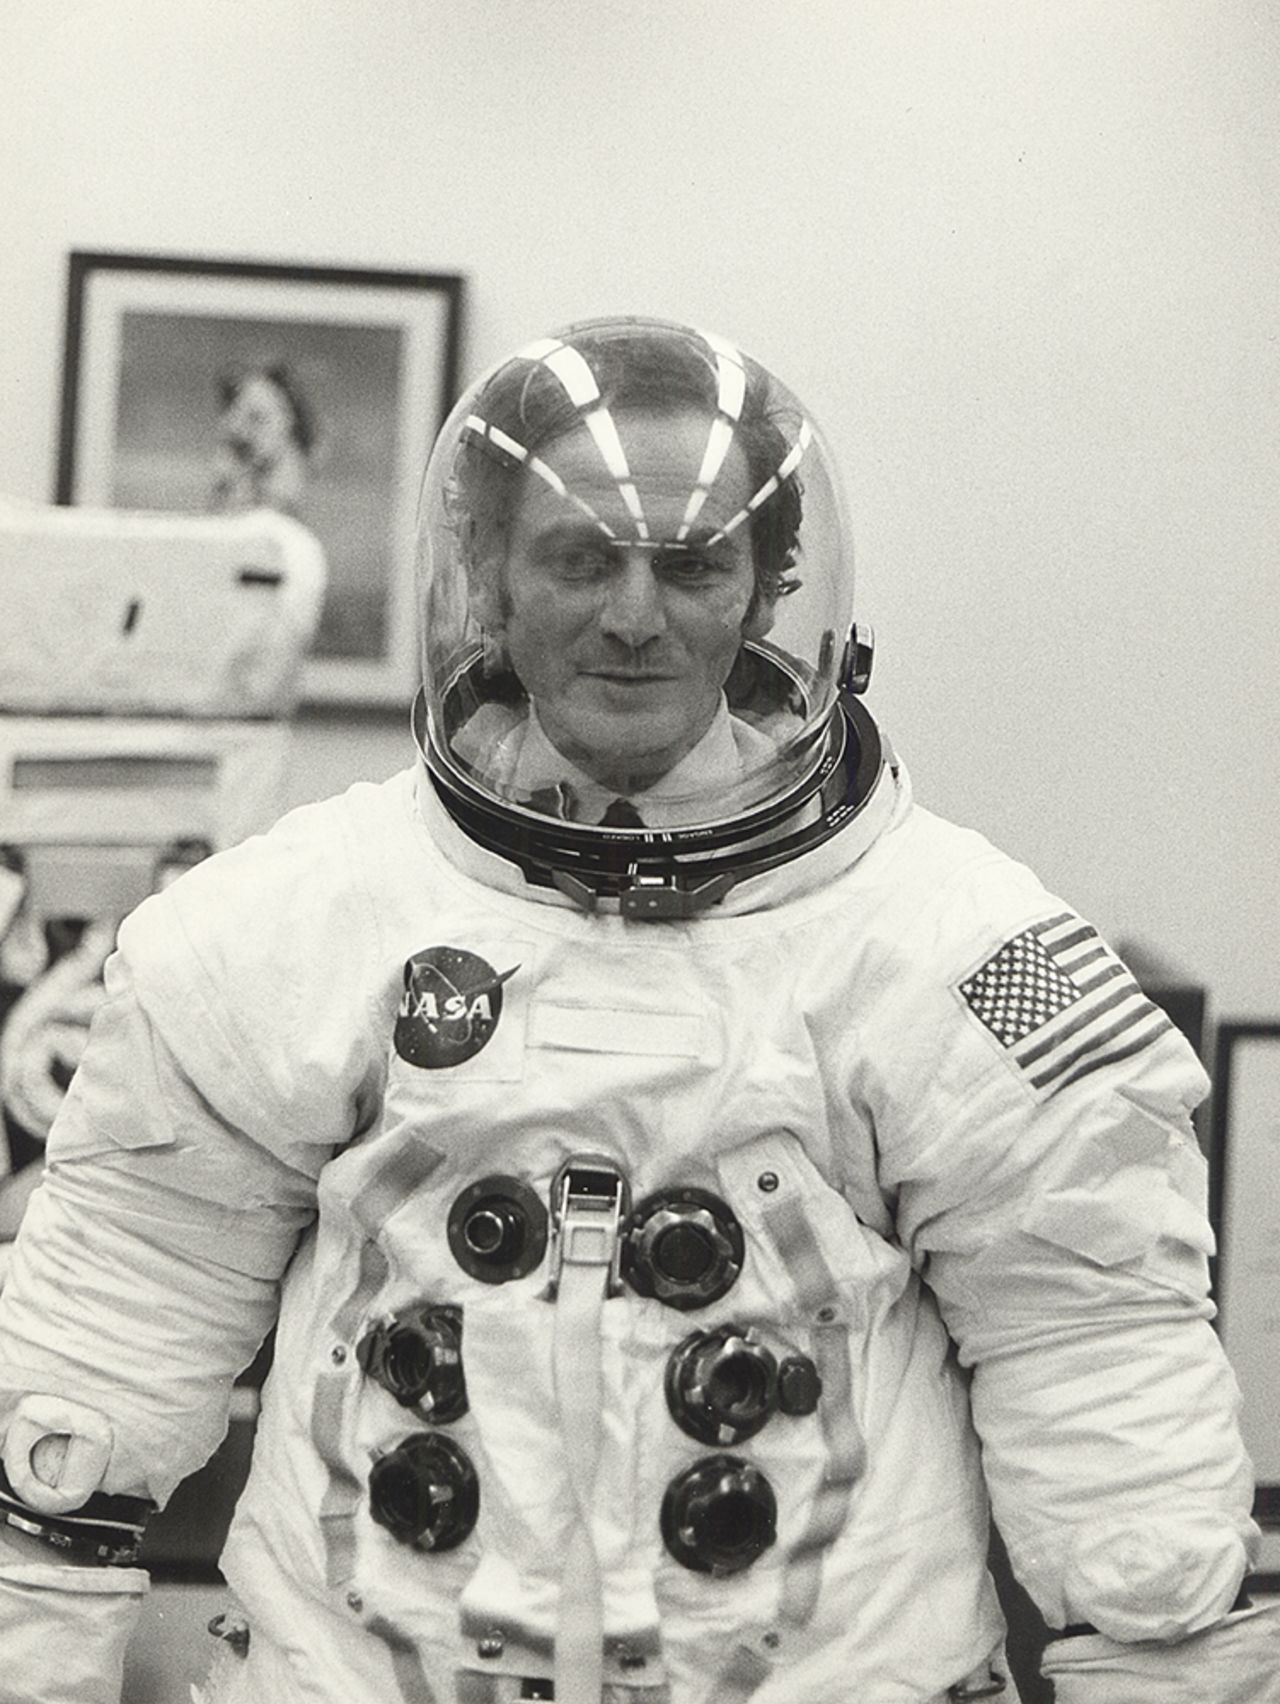 Pierre Cardin wearing an Apollo 11 space suit, 1969.